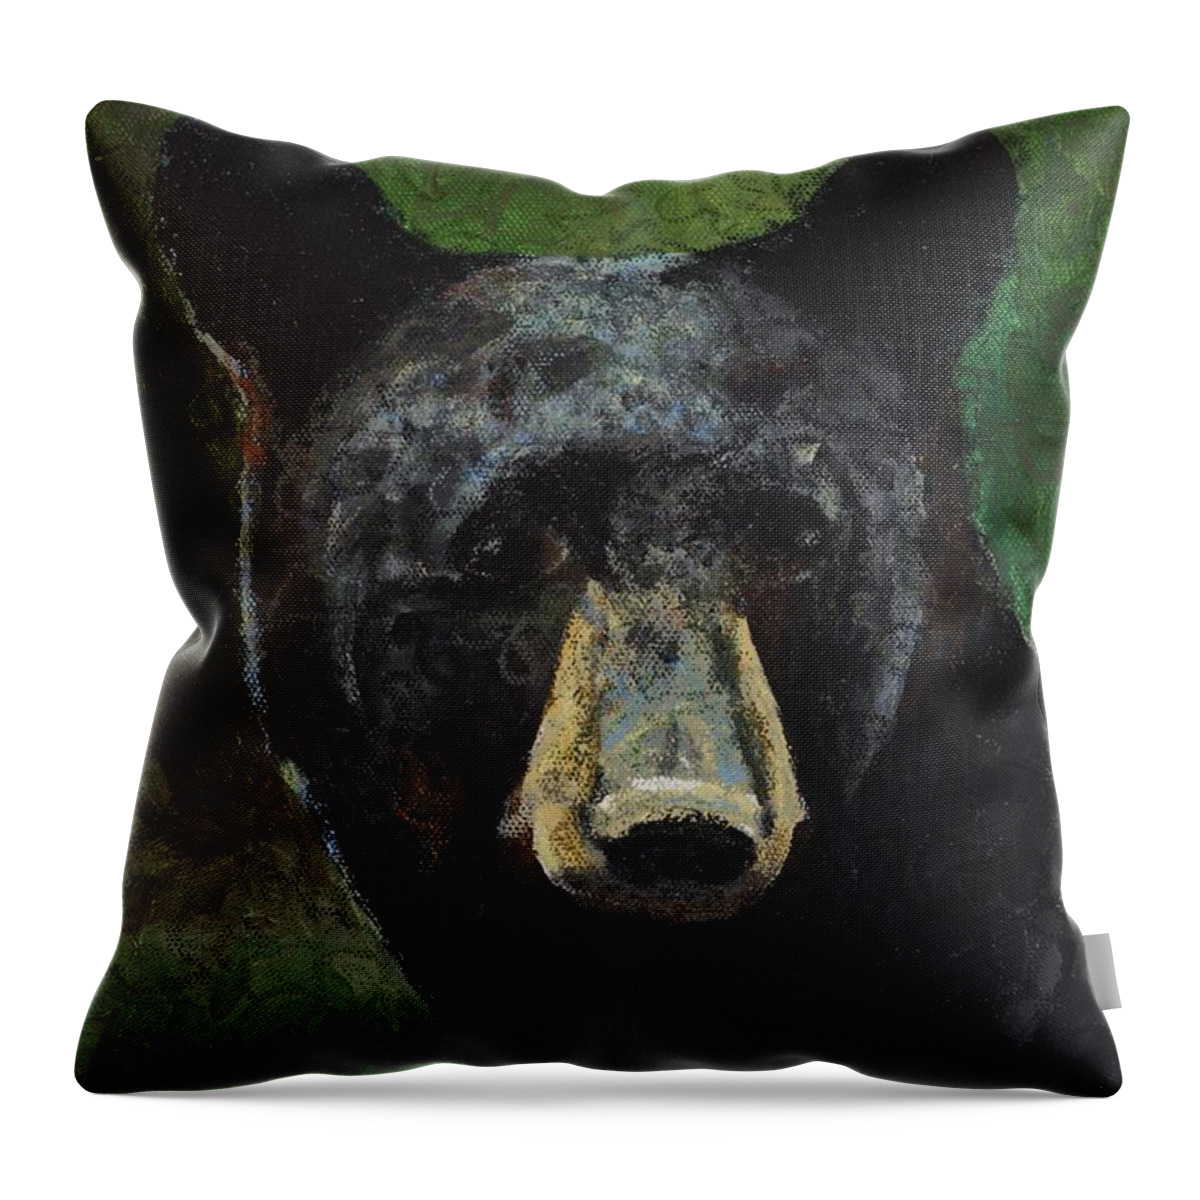 Wildlife Throw Pillow featuring the painting Black Bear by C Ryan Pierce